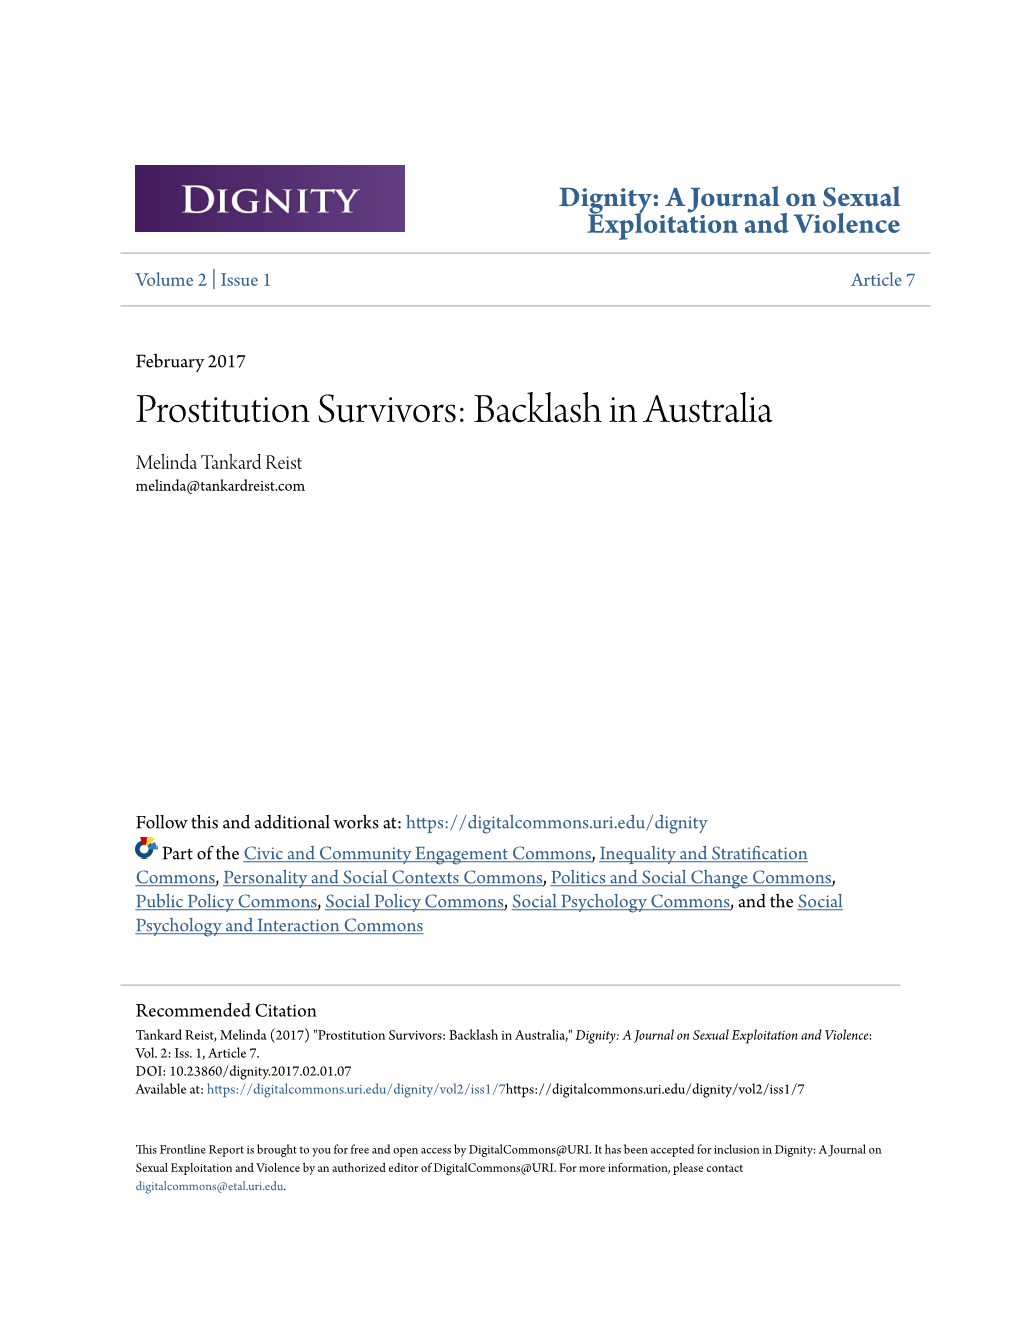 Prostitution Survivors: Backlash in Australia Melinda Tankard Reist Melinda@Tankardreist.Com